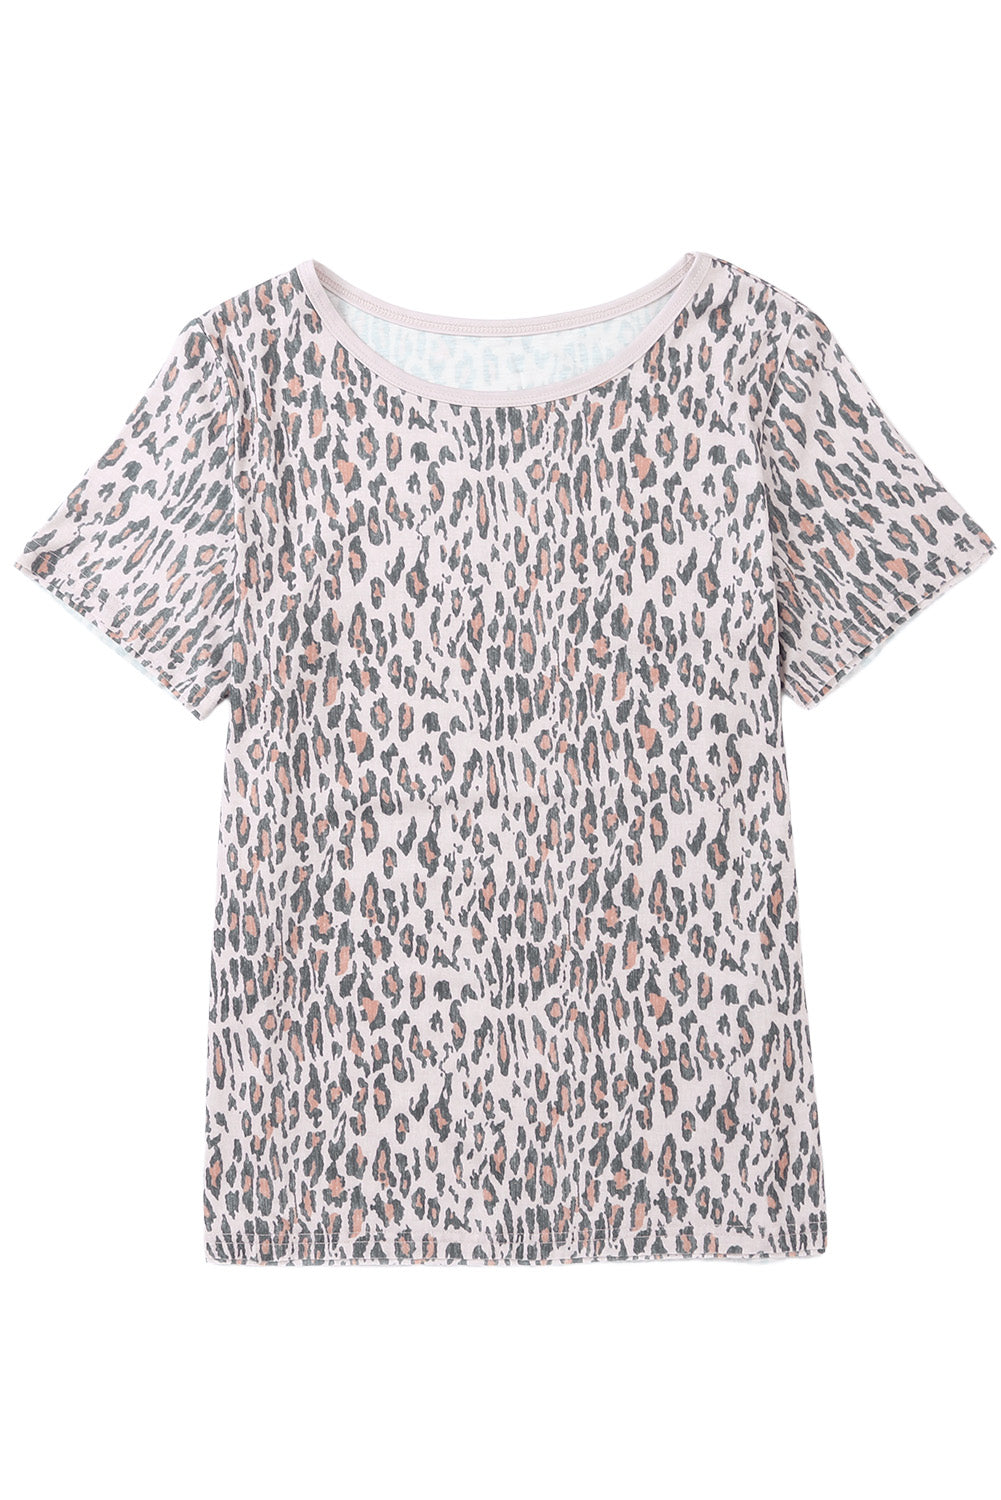 Leopard Animal Print Casual T-shirt